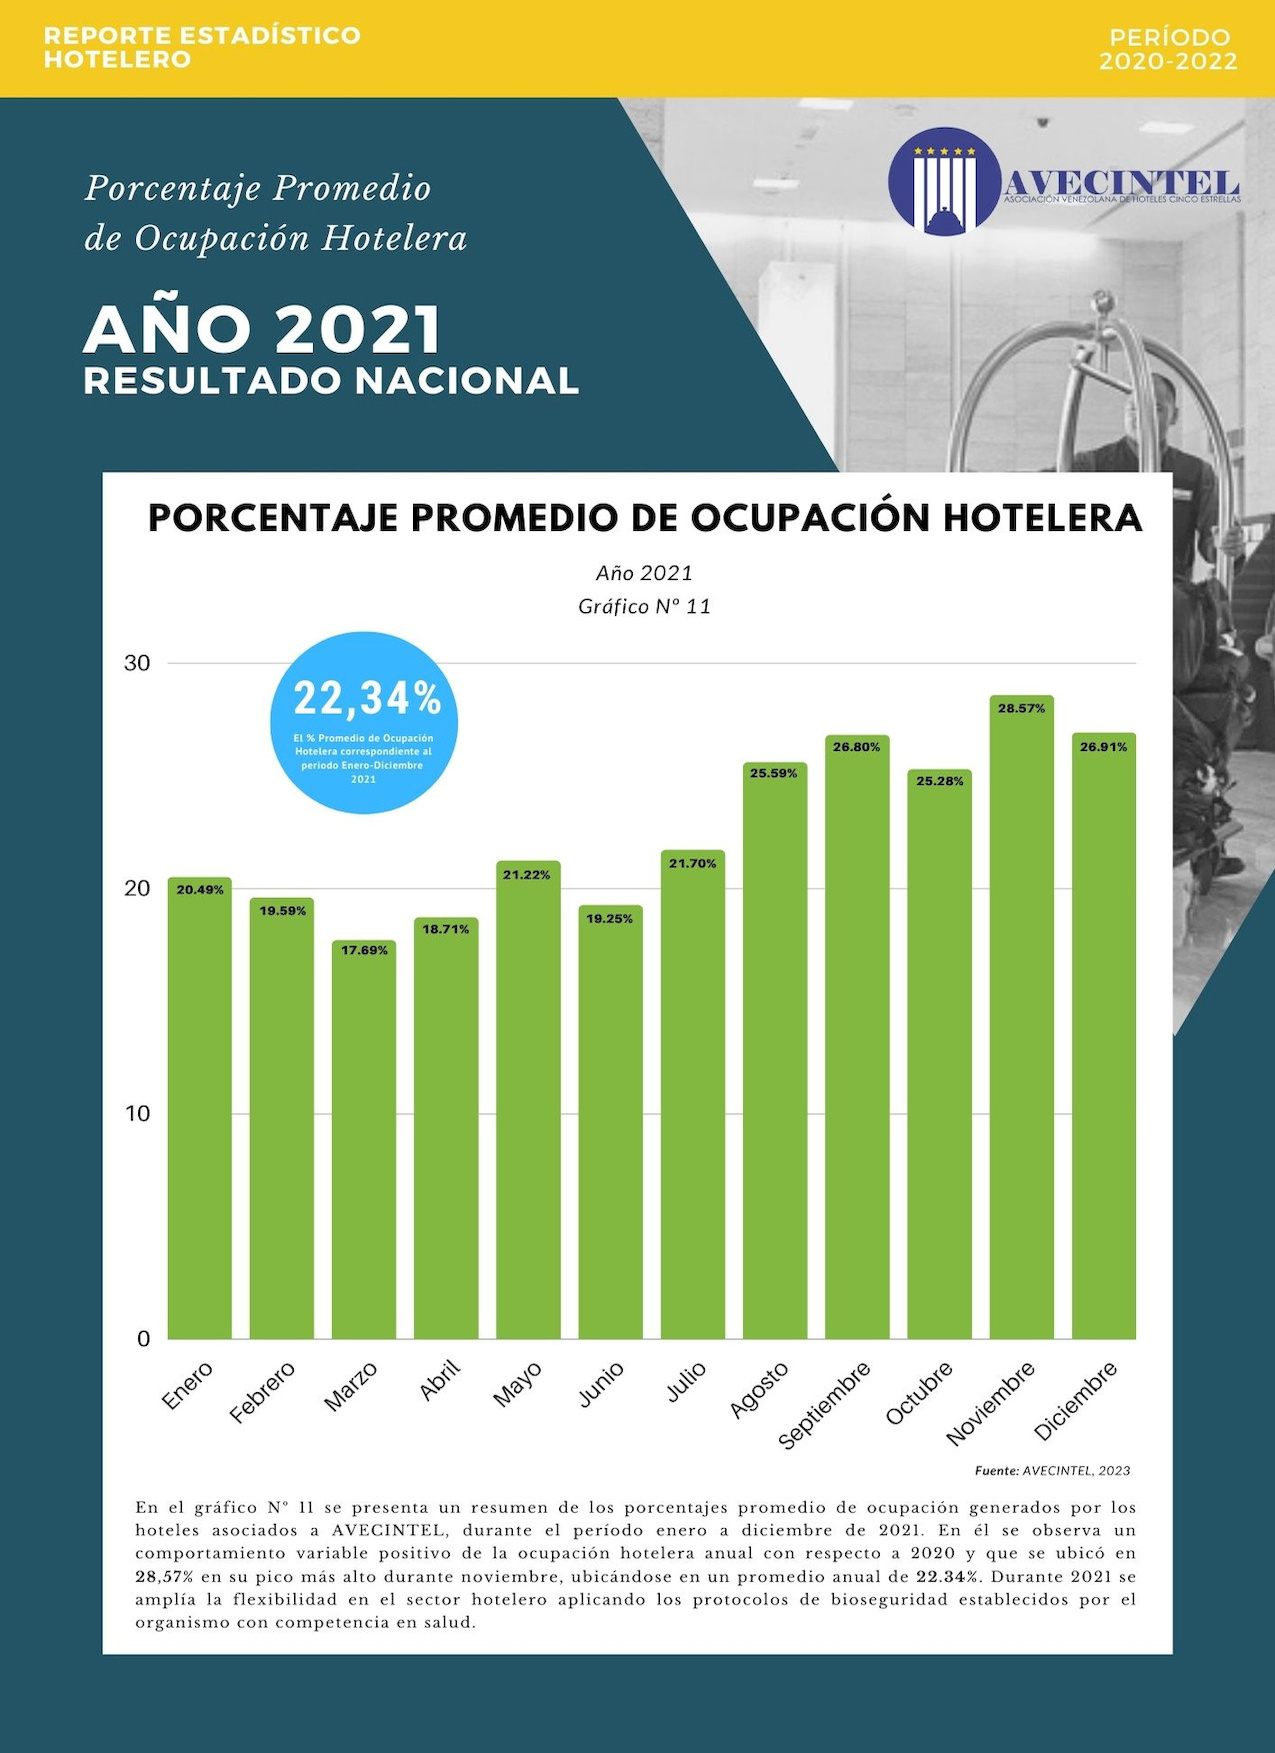 57-REV Reporte Estadistico Hotelero